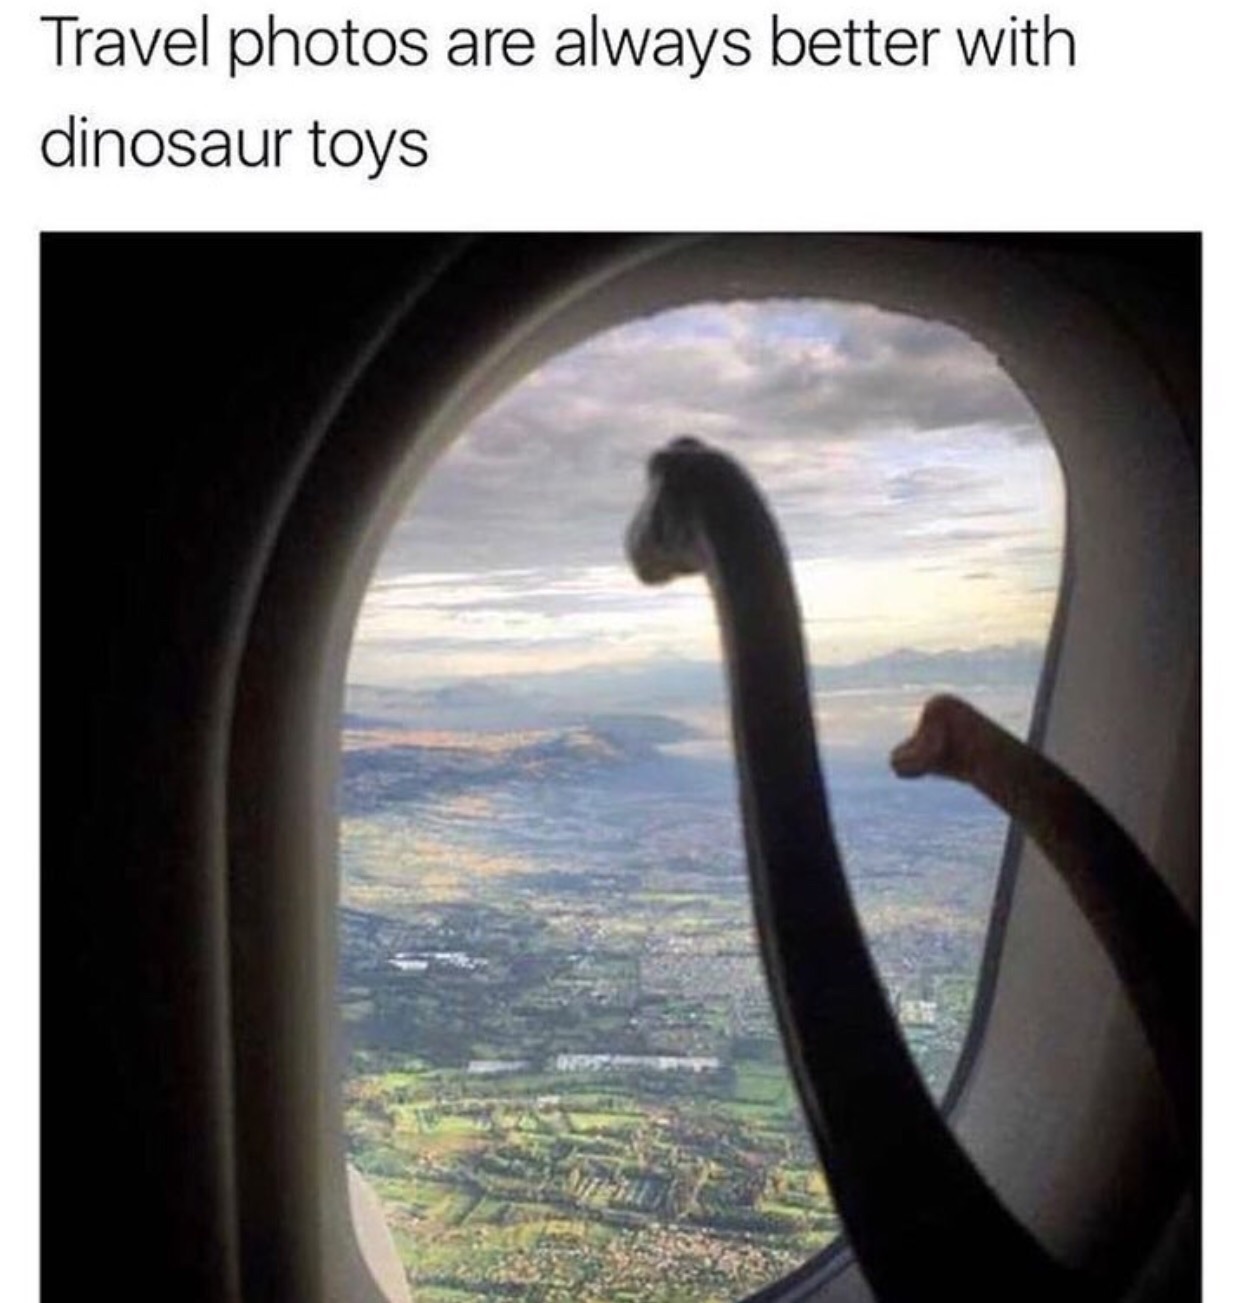 dinosaur on holiday - Travel photos are always better with dinosaur toys